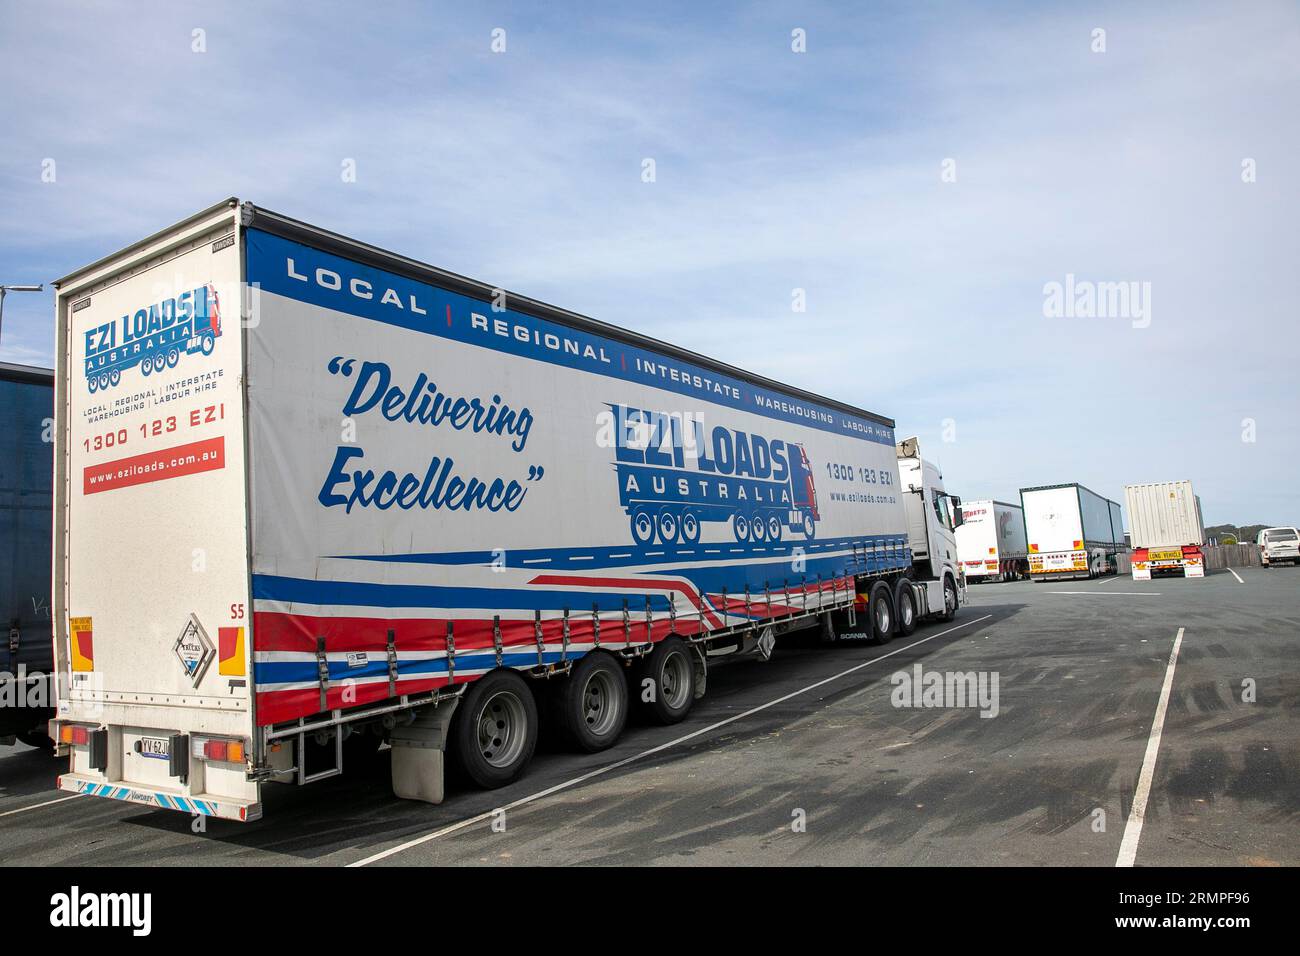 Australian freight heavy goods trucks vehicles parked near Port Macquarie in New South Wales,Australia Stock Photo